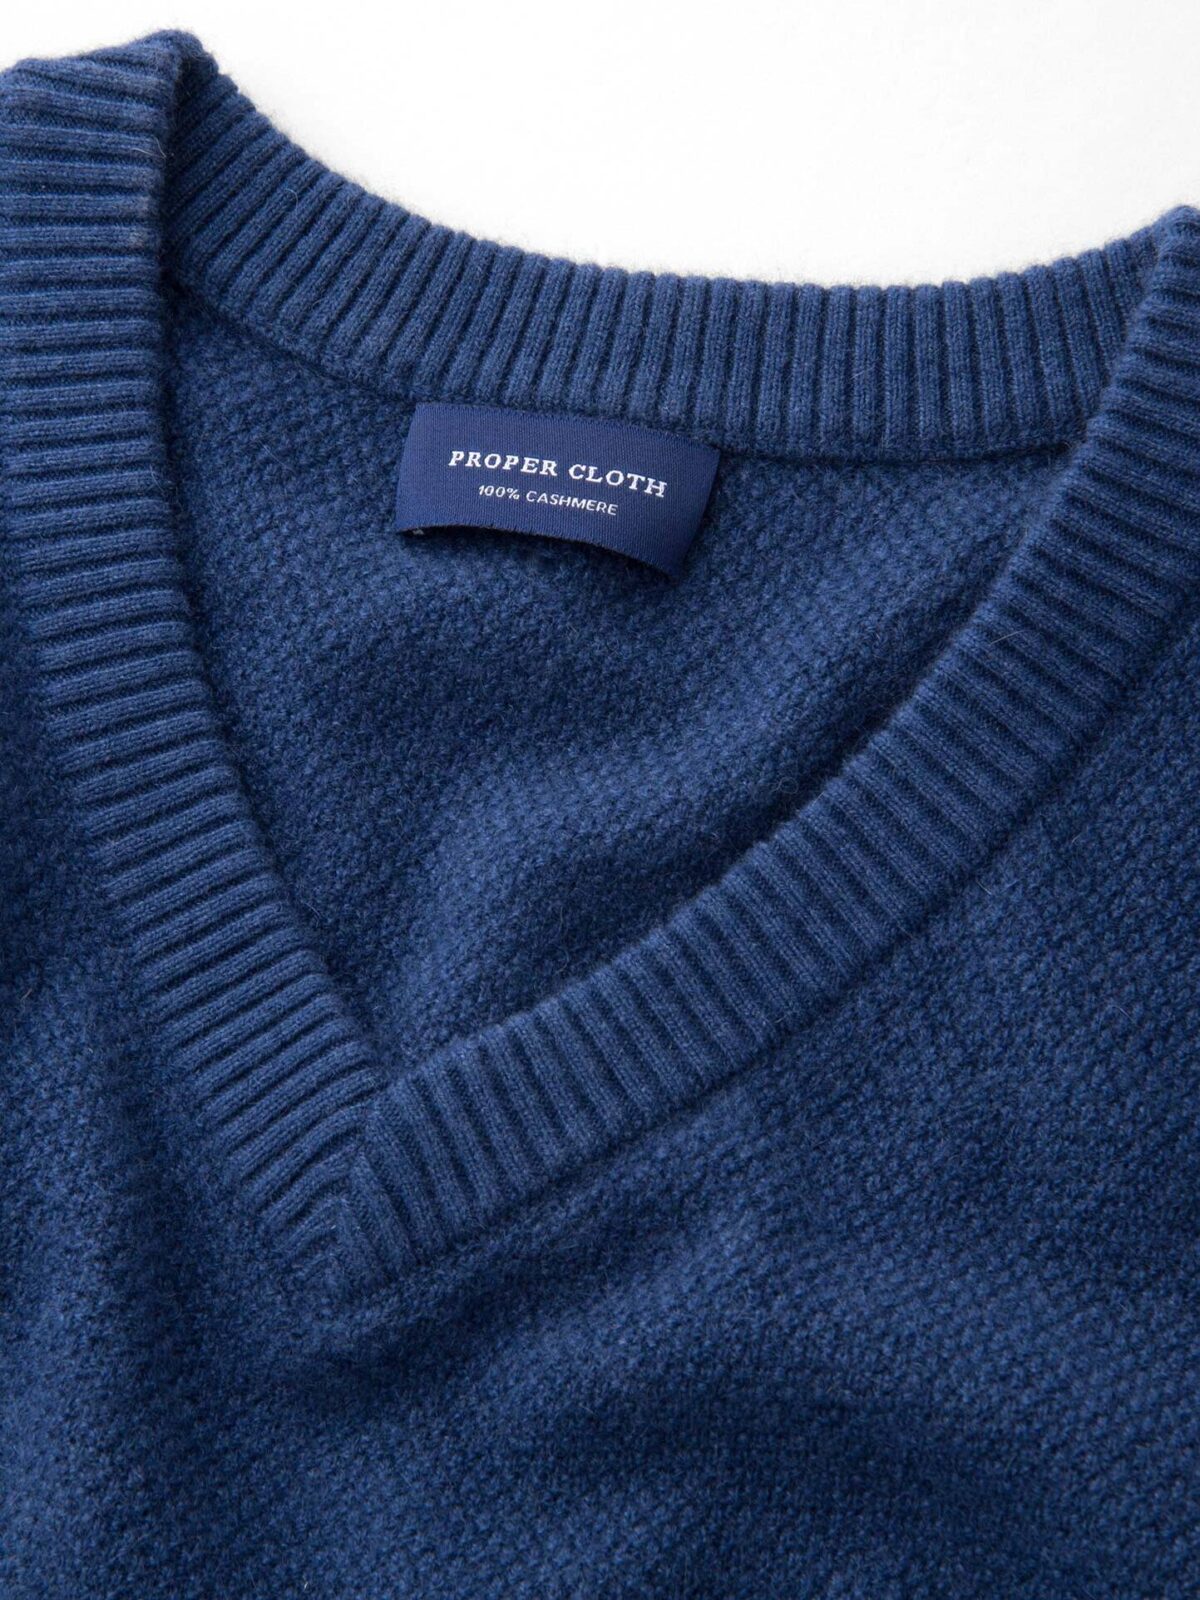 Ocean Blue Cobble Stitch Cashmere V-Neck Sweater